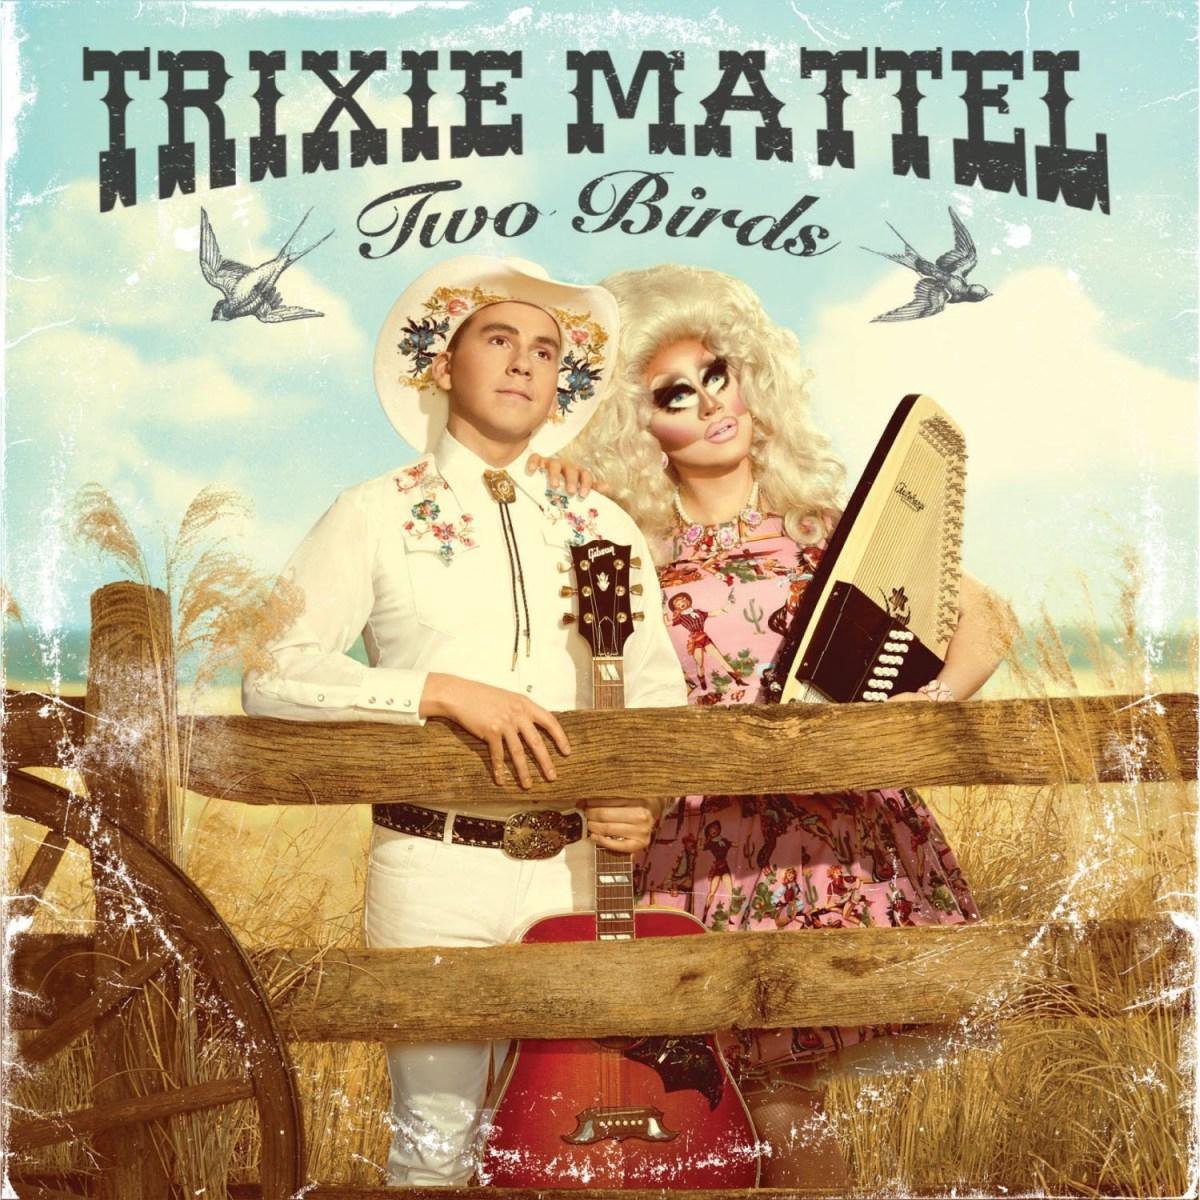 Trixie Mattel - Two Birds / One Stone (Coloured Vinyl) (LP) - Trixie Mattel